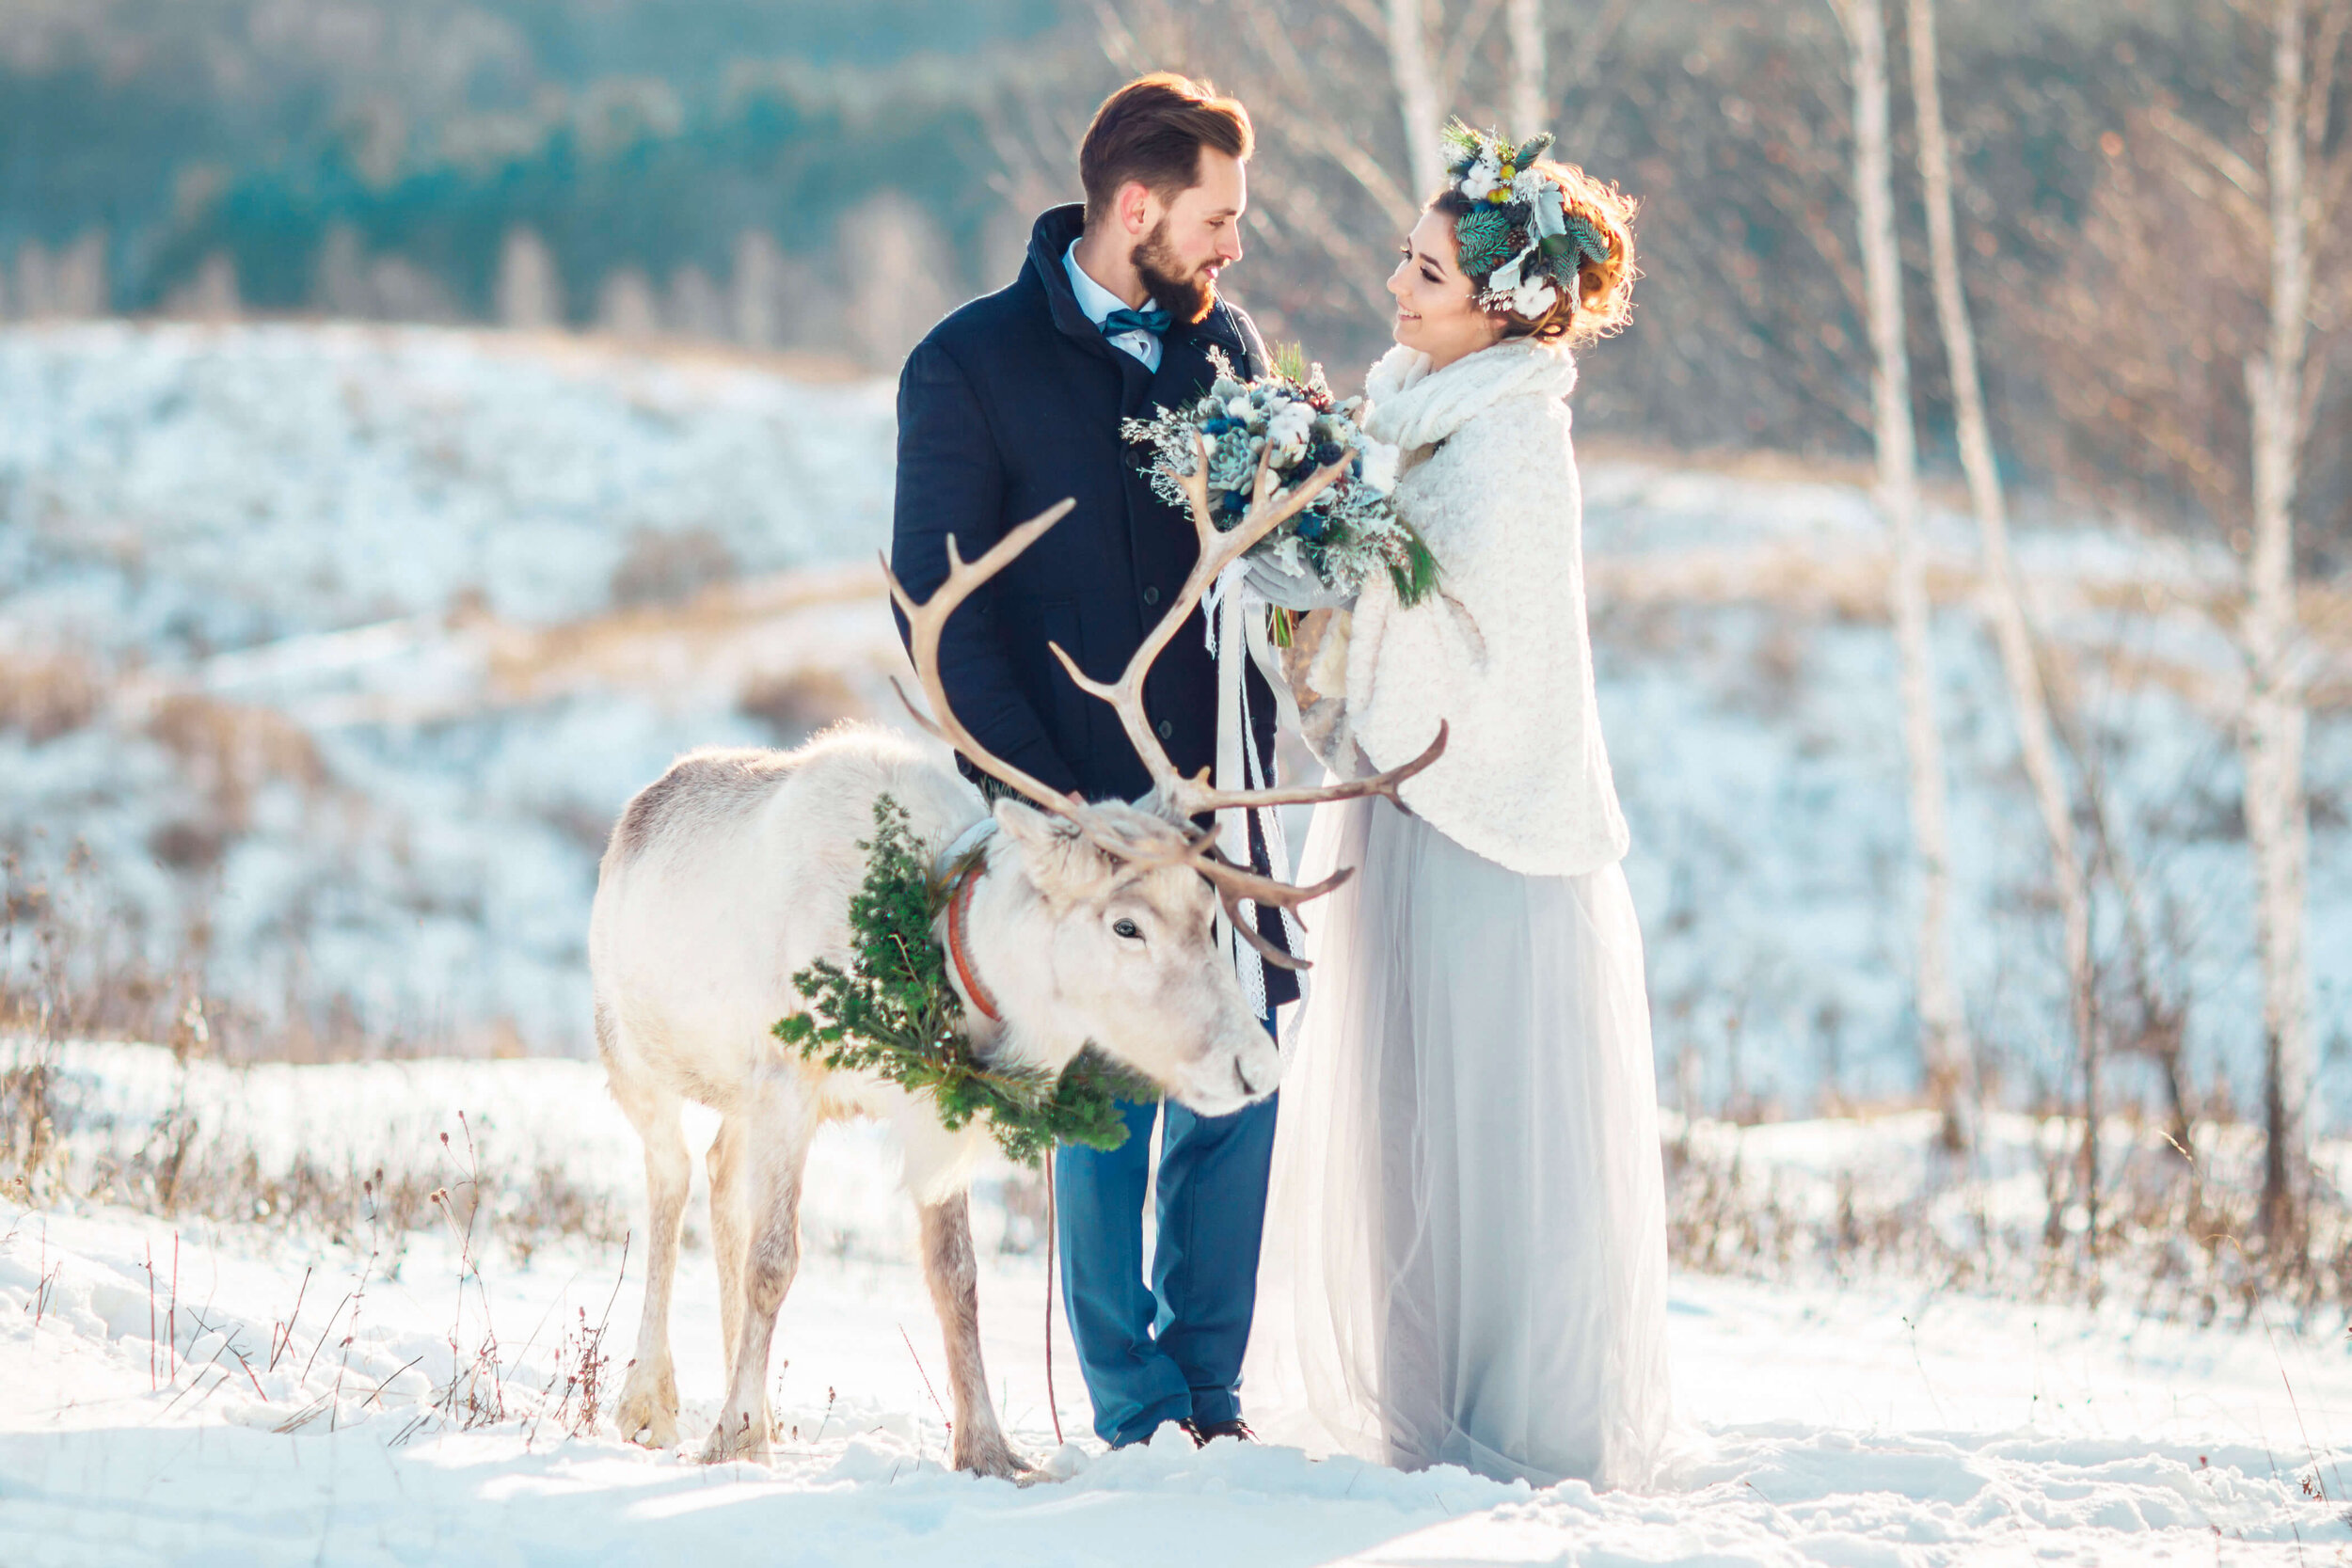 Winter Wonderland Romantic Couple Wedding Cake Topper 